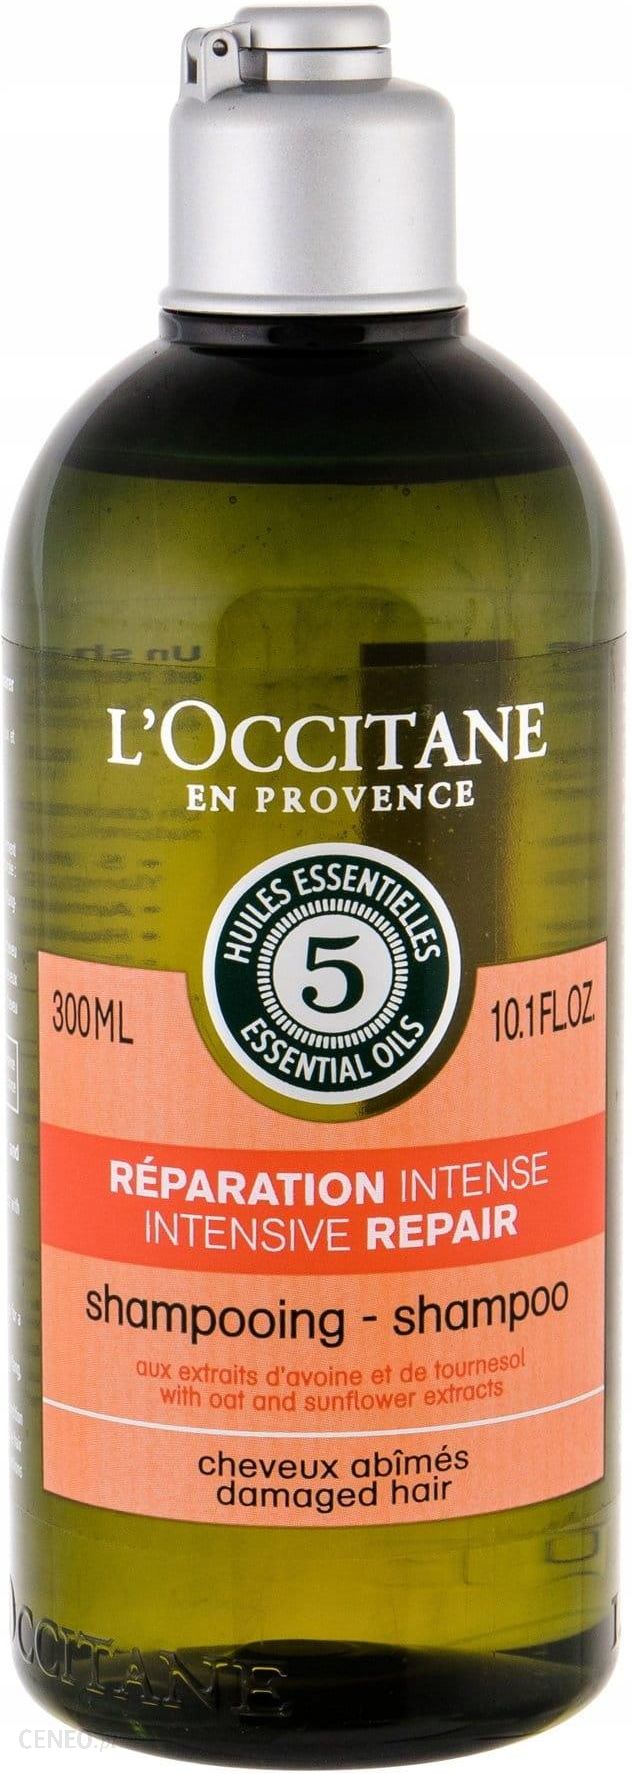 ceneo occitane szampon